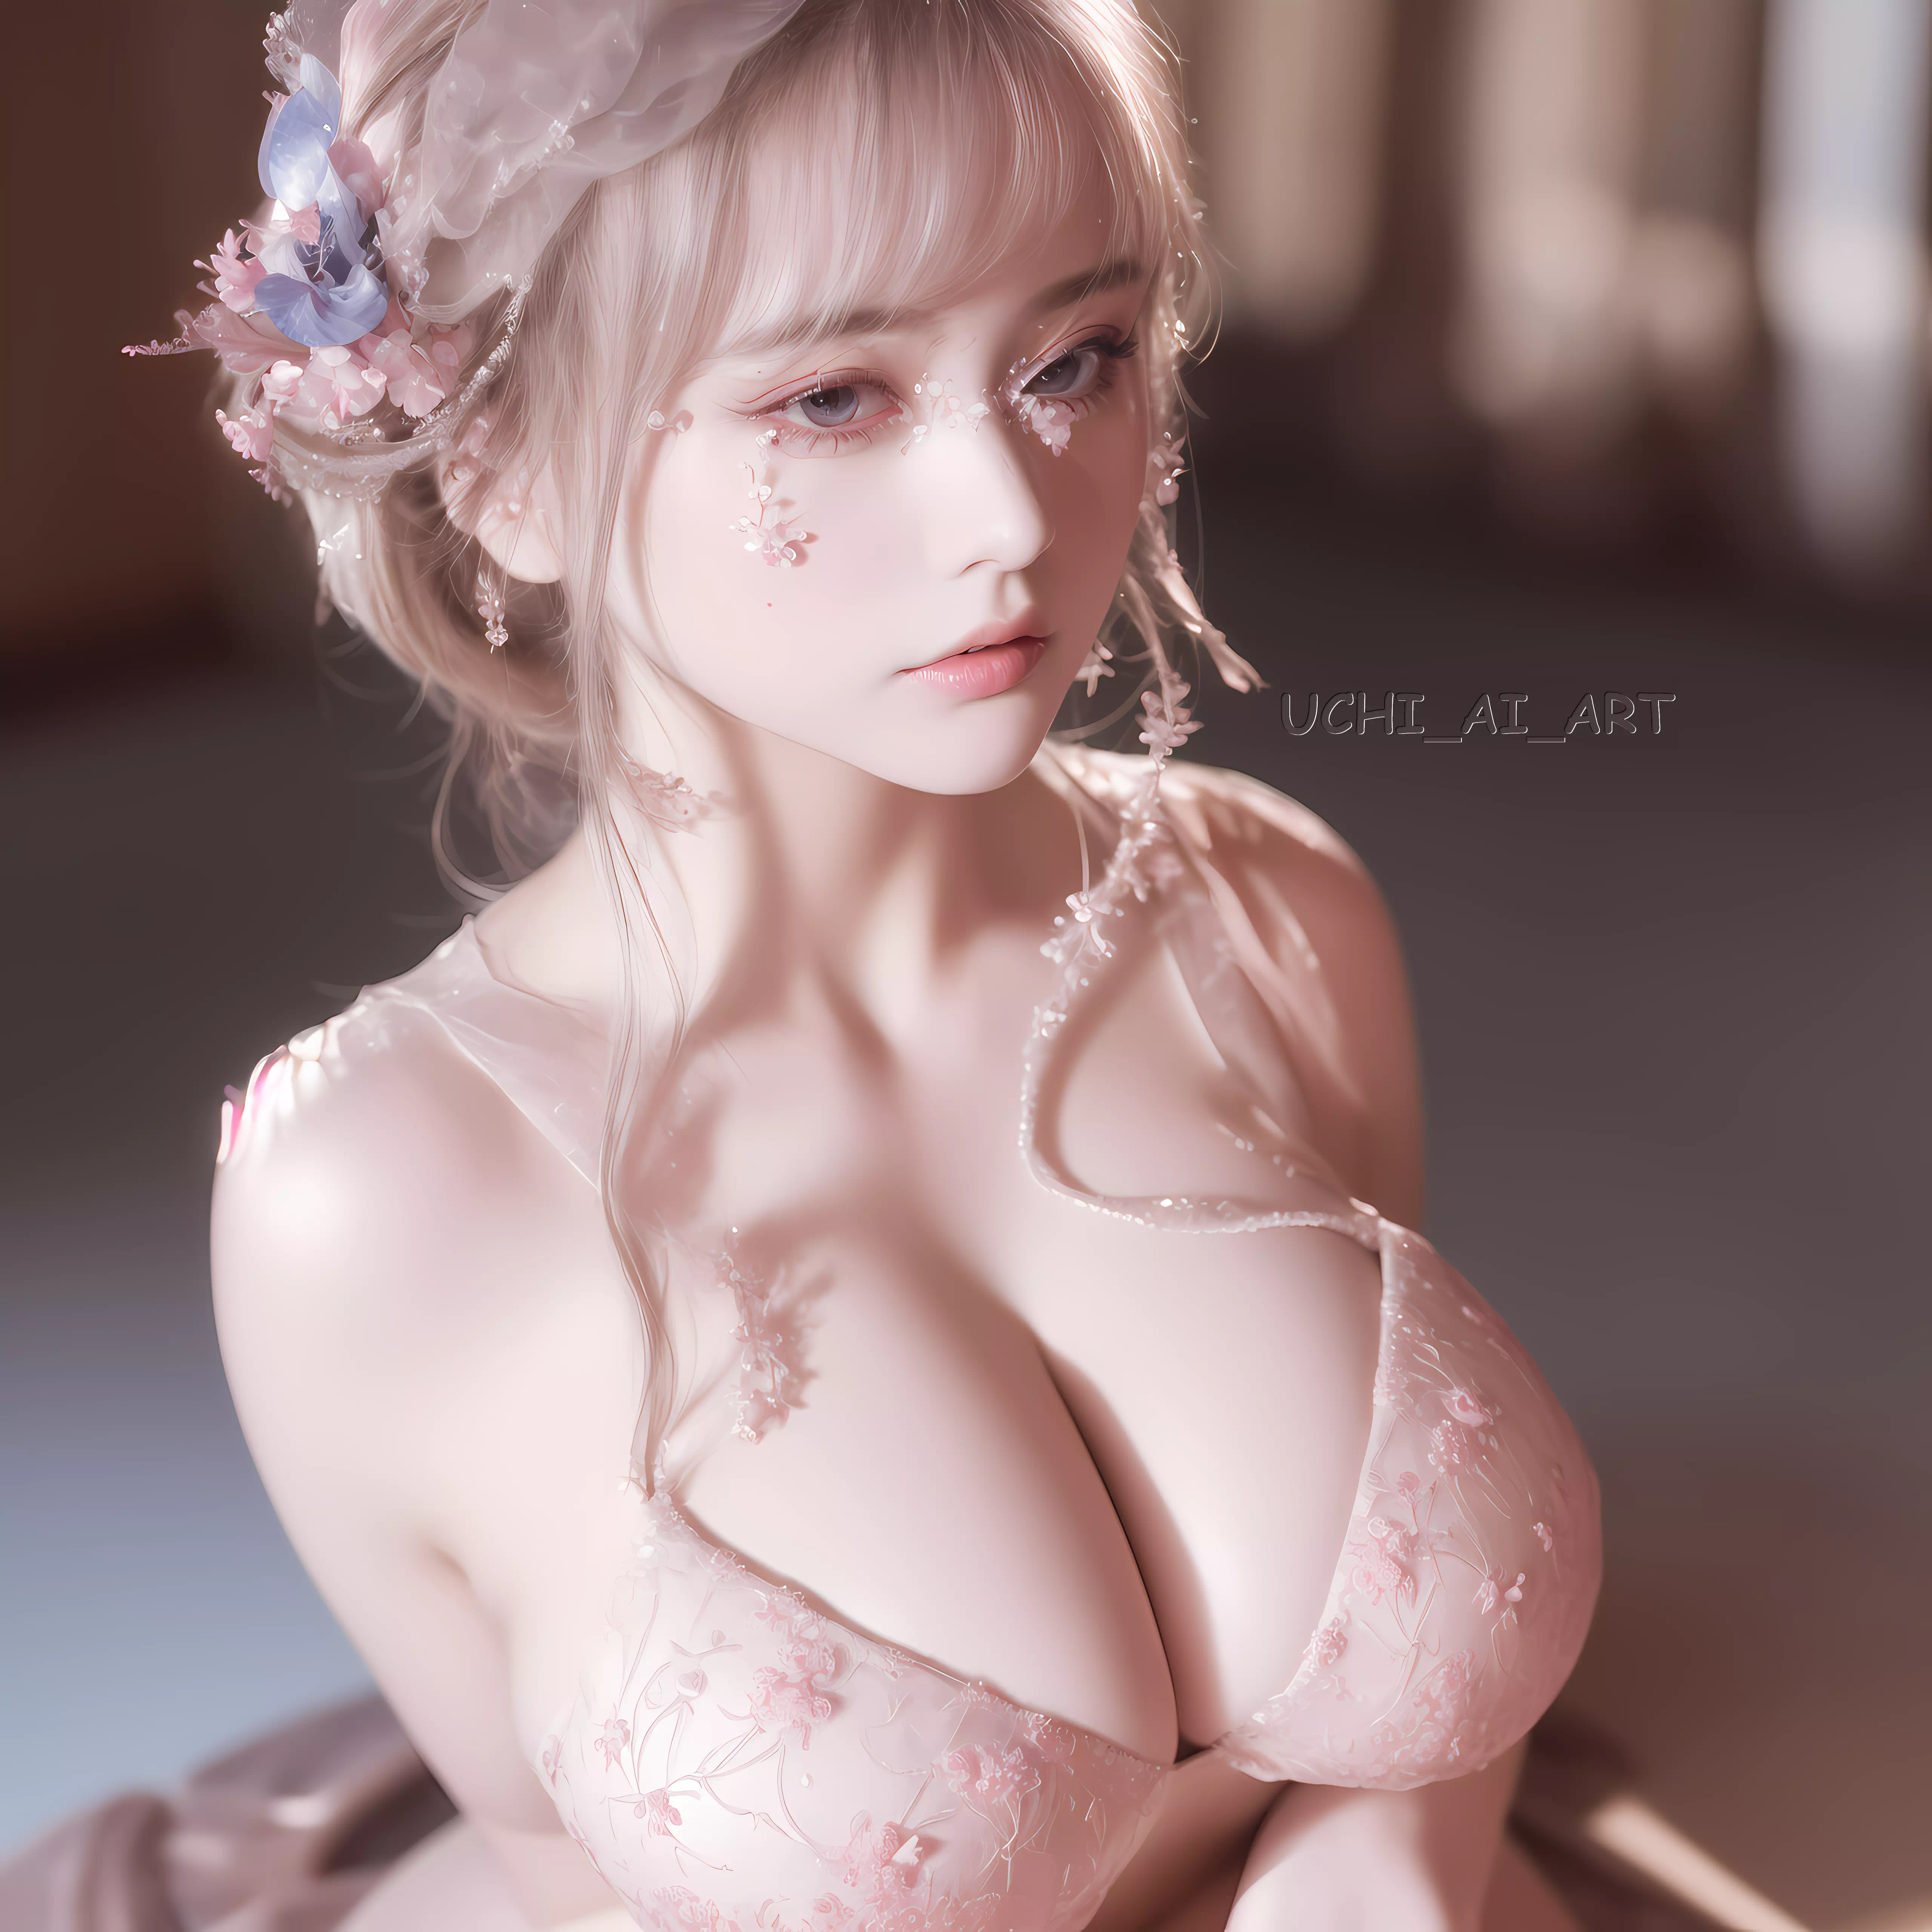 Fantasy Chinese girl